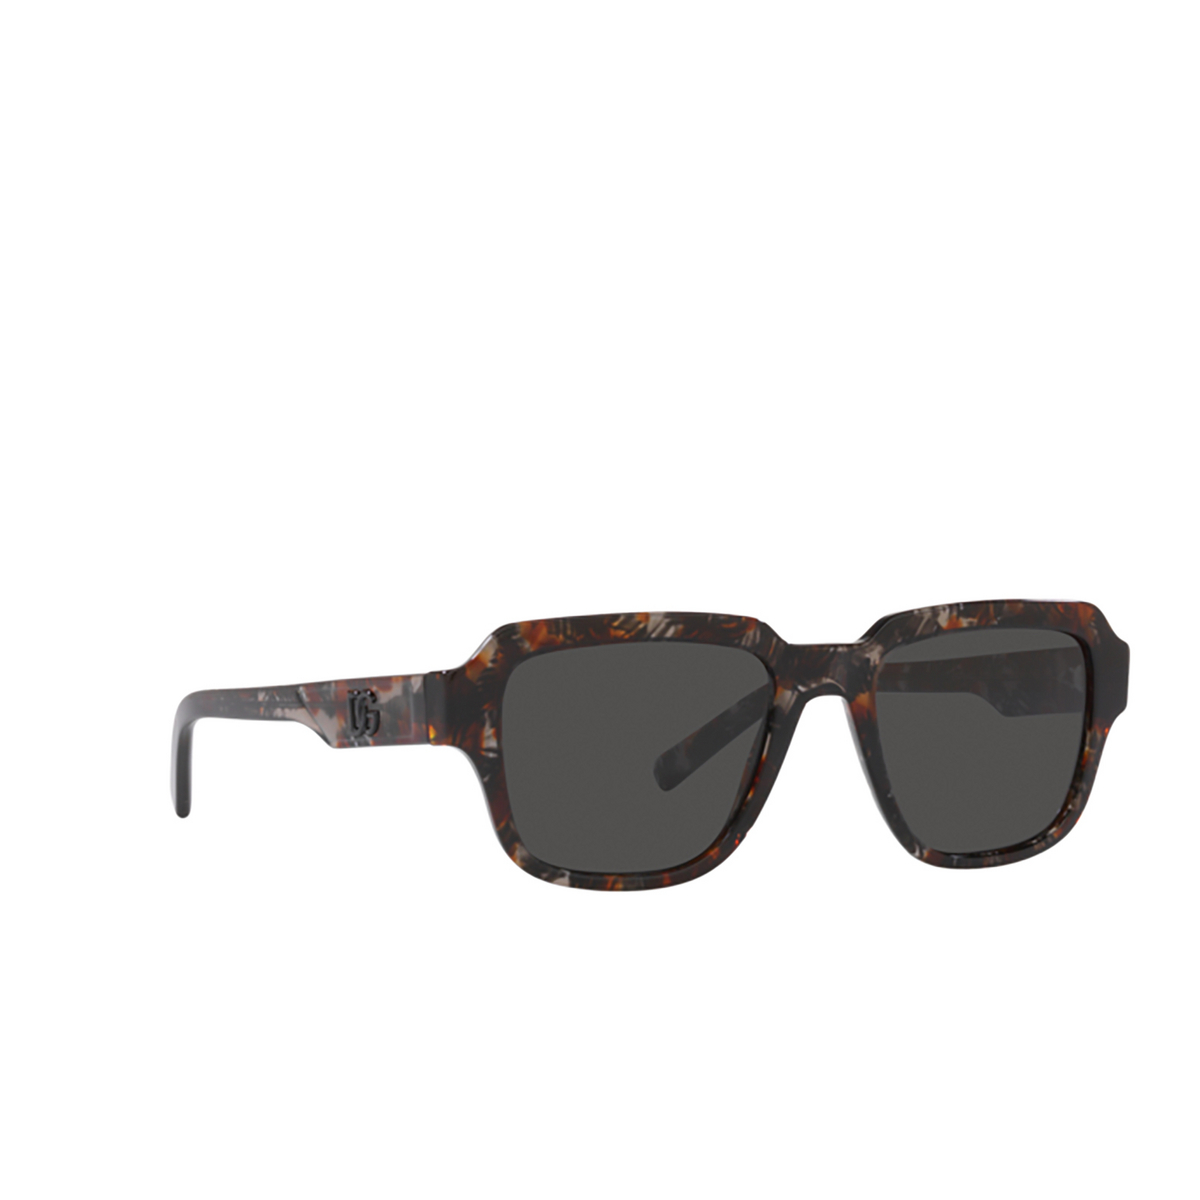 Dolce & Gabbana DG4402 Sunglasses 335687 Grey havana - three-quarters view